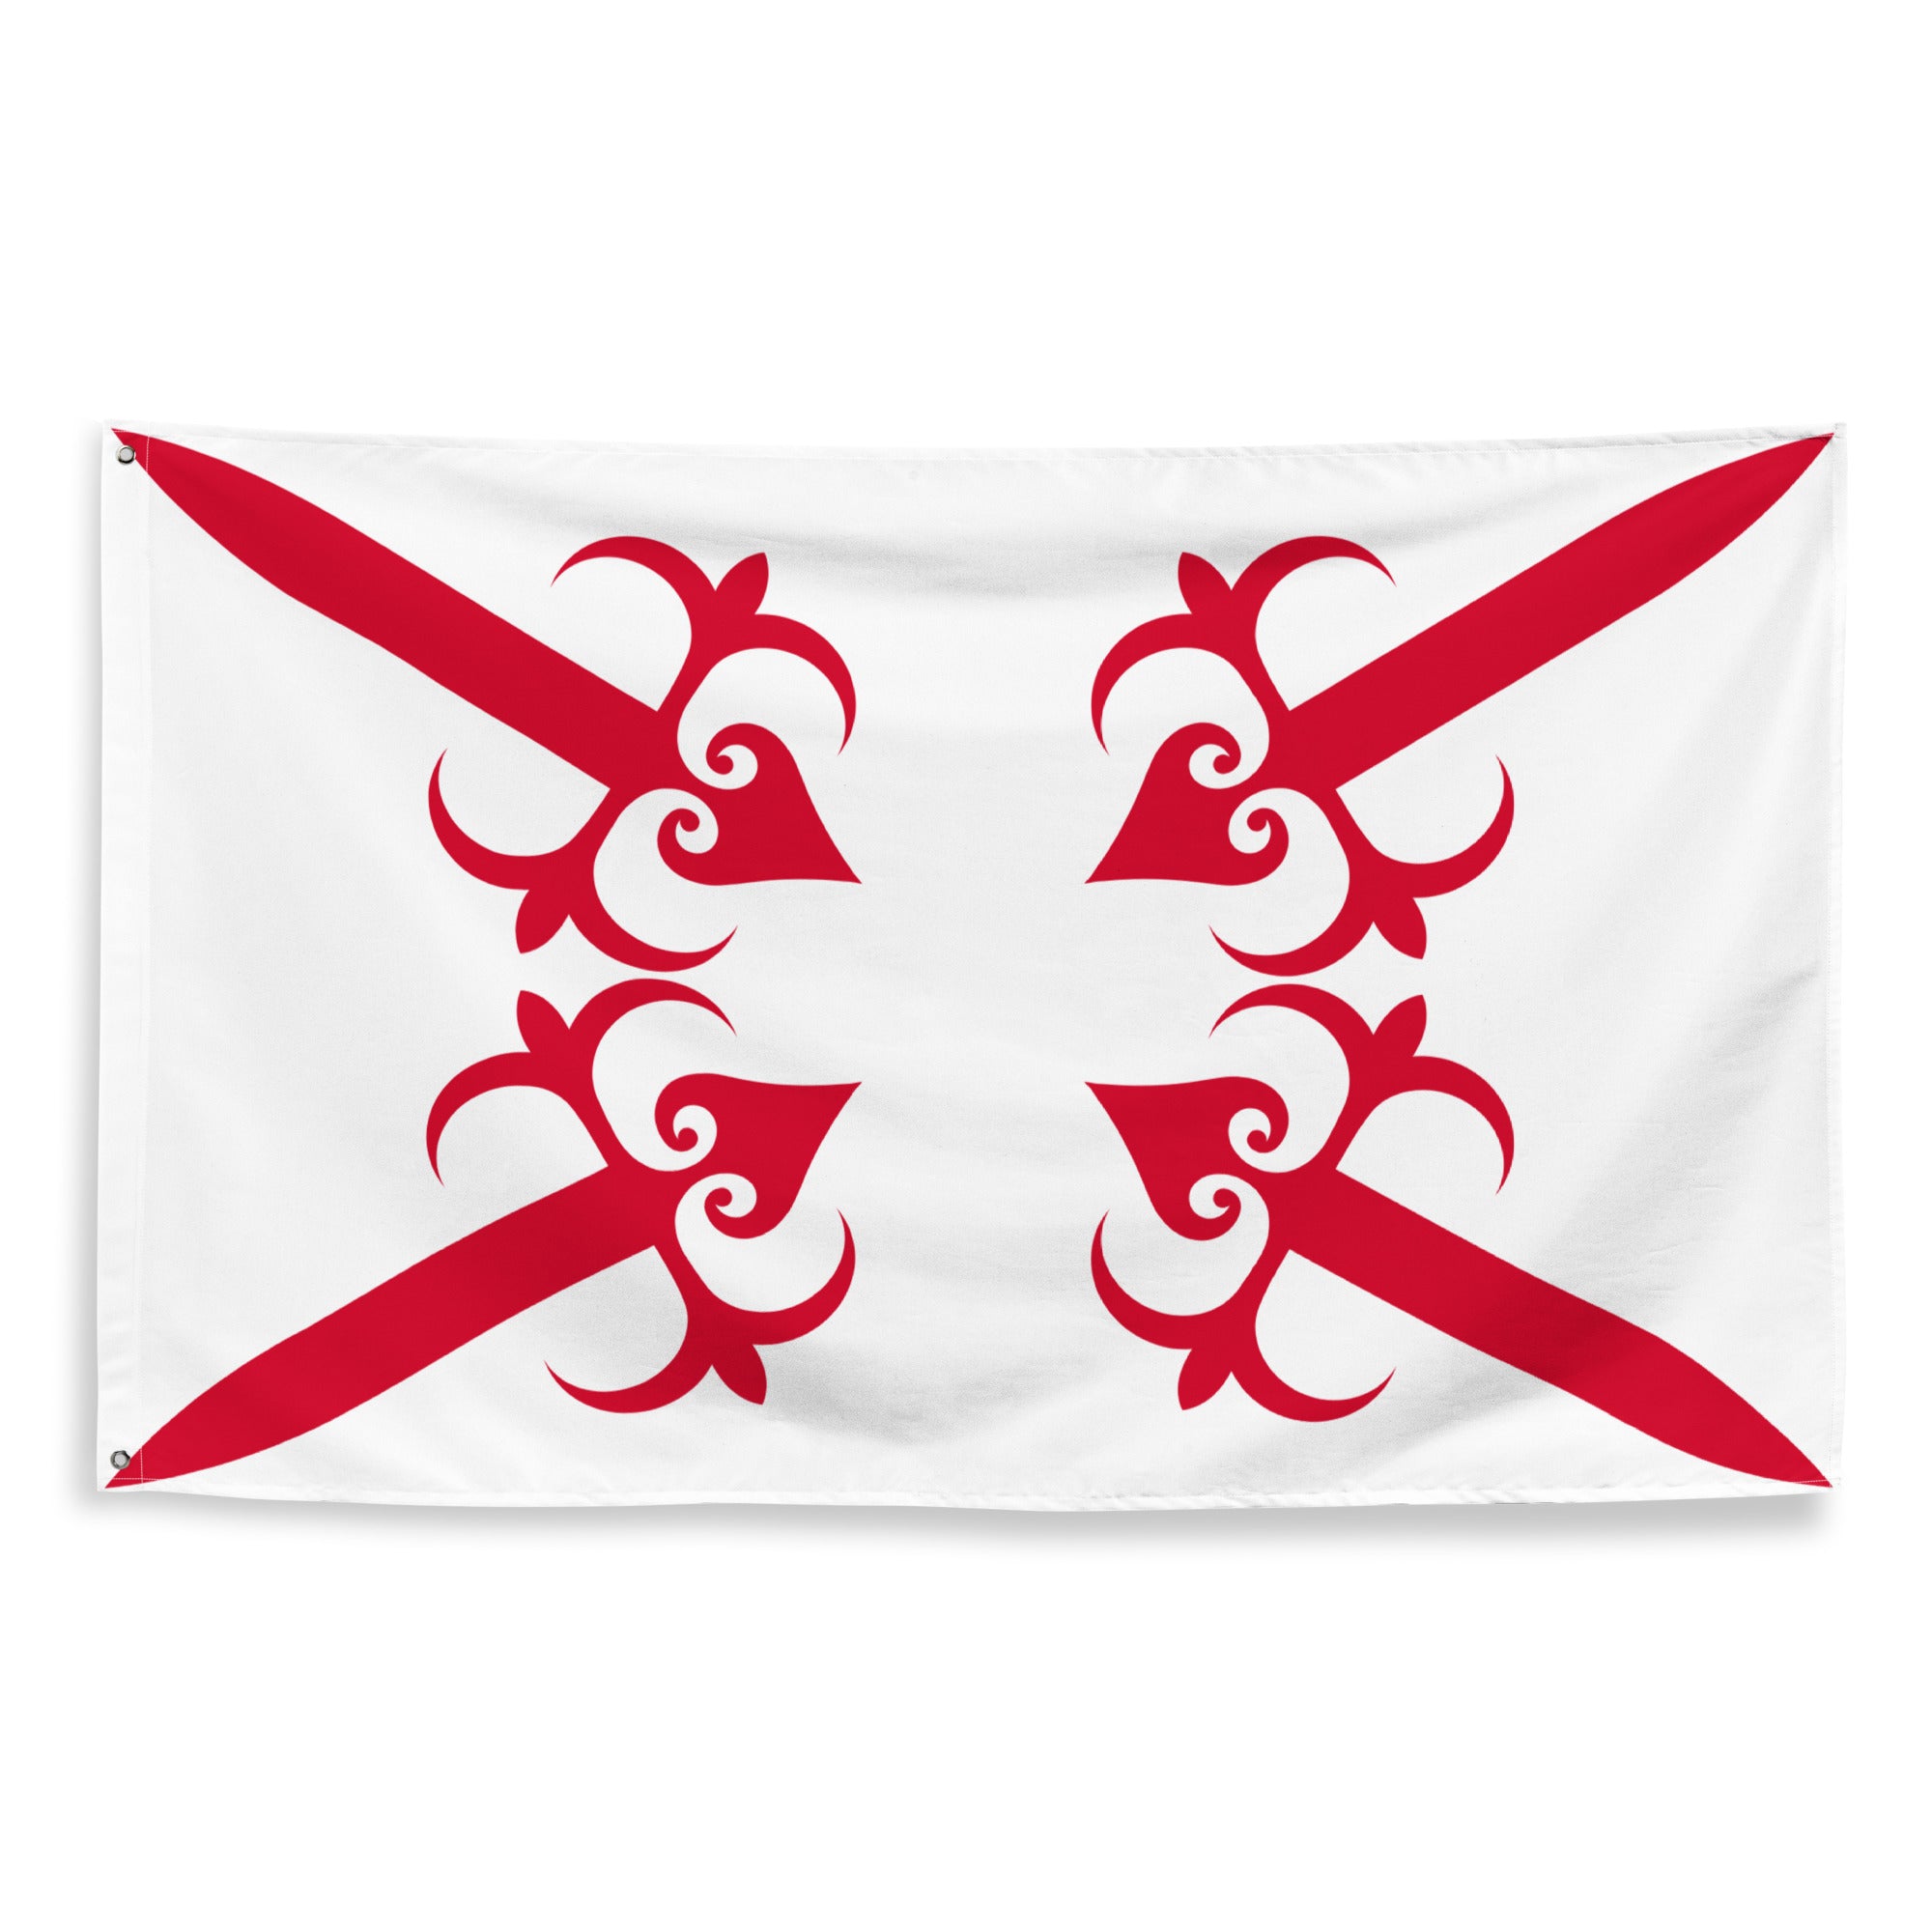 Bandera Aspa de Borgoña